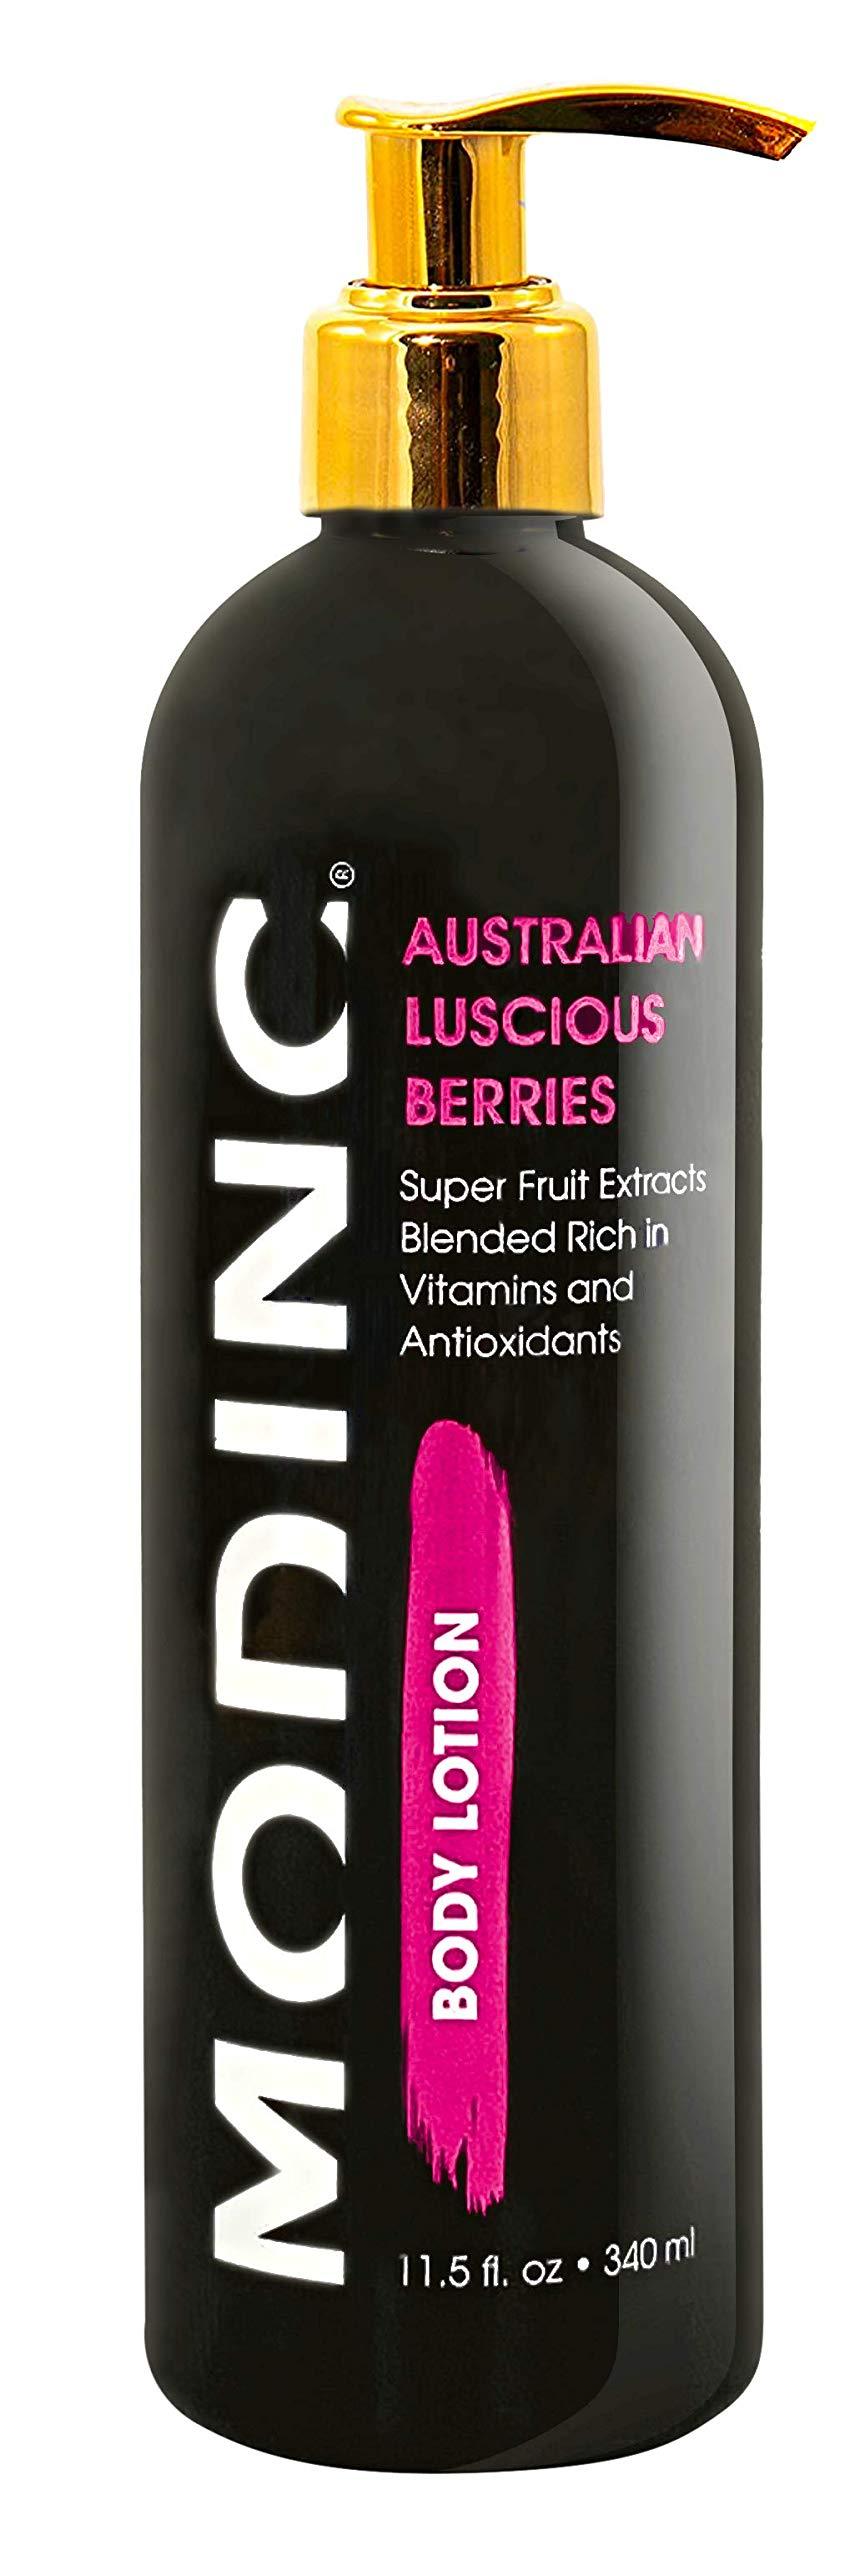 [Australia] - Modinc Luxury Body Lotion Australian Luscious Berries Formula, Hydration Blend, Vegan, Cruelty Free, Pump, 11.5 Ounces 